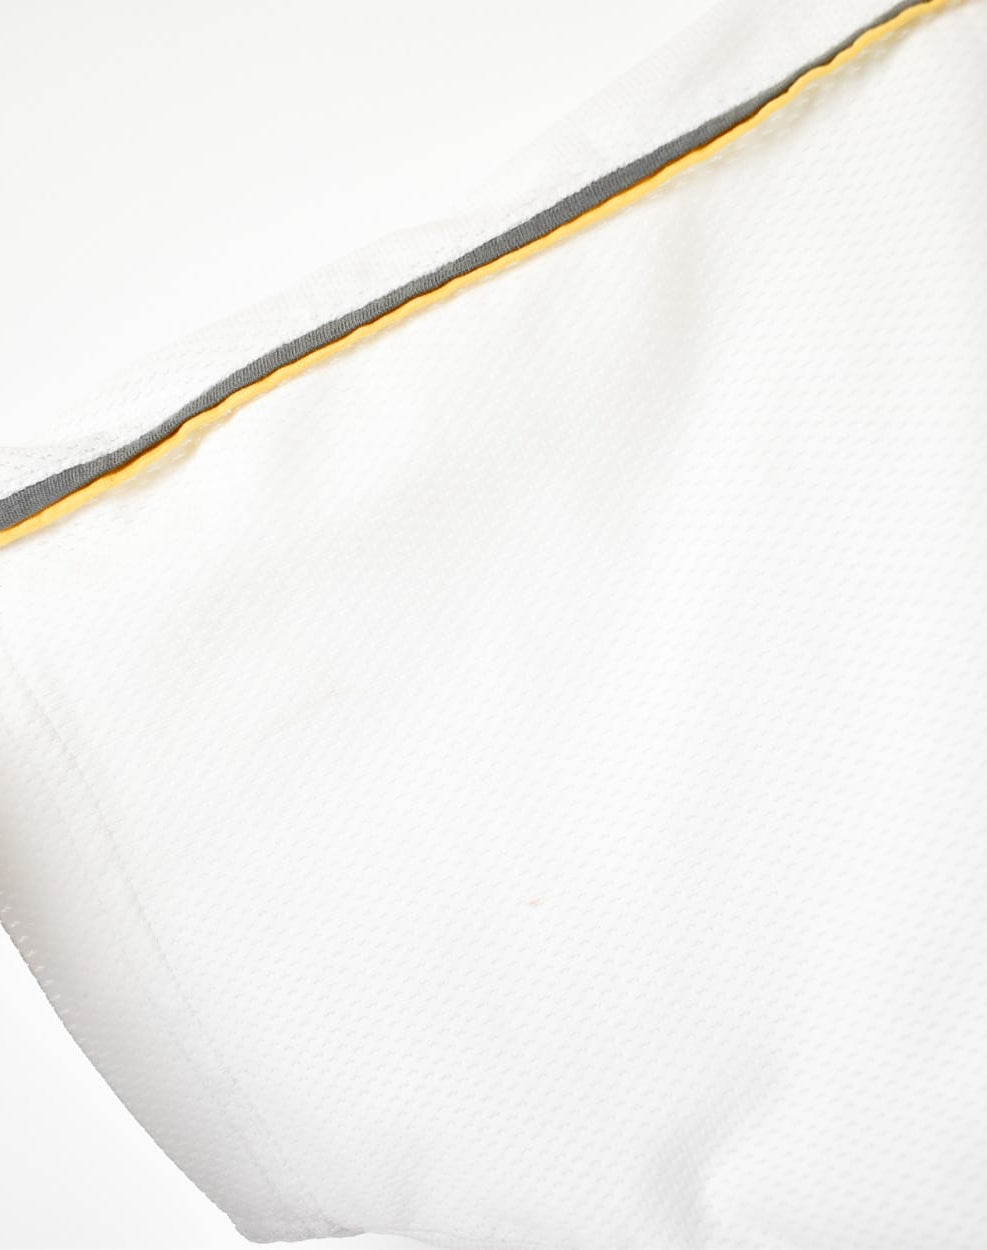 White Nike Polo Shirt - Medium